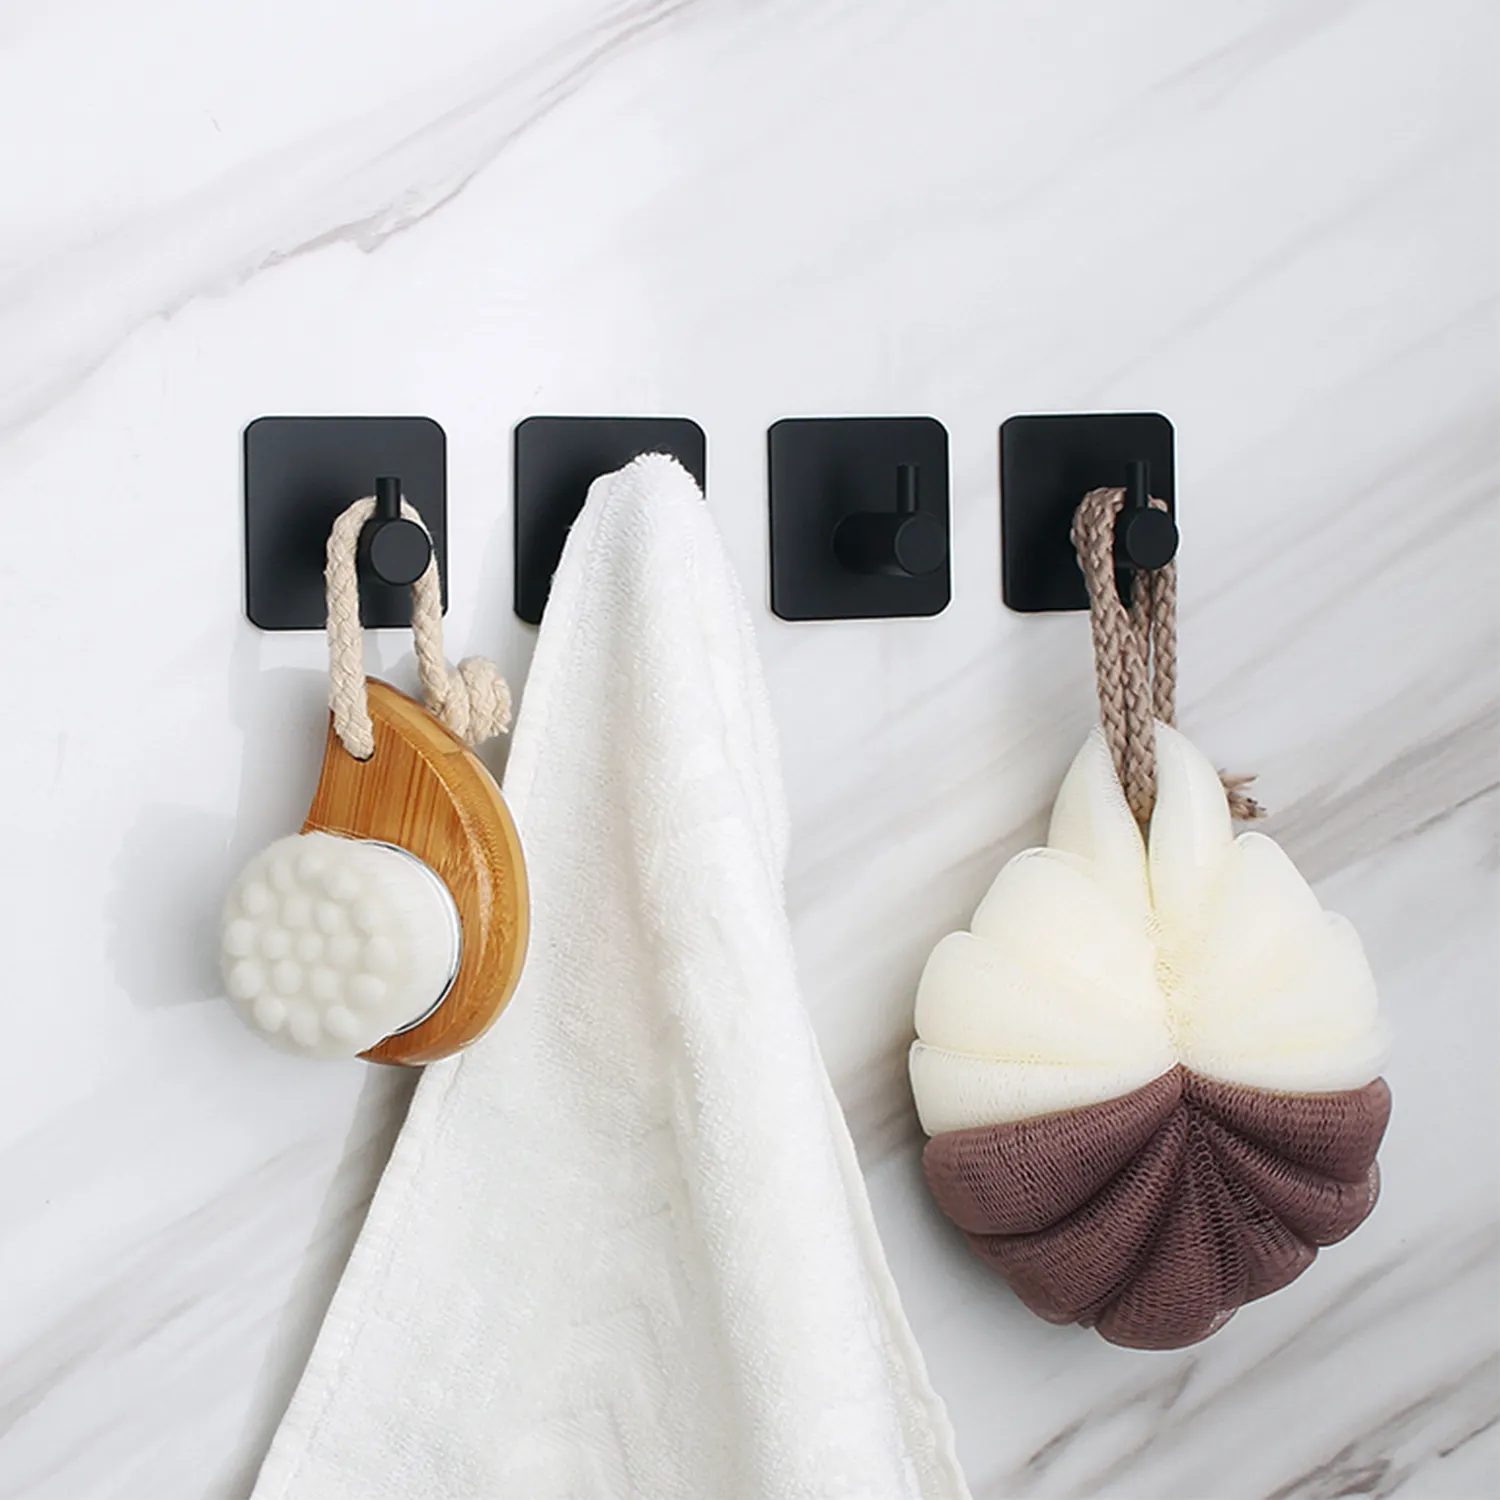 Kait handuk terpasang di dinding baja tahan karat 304 kait berperekat hitam kamar mandi untuk dapur ruang tamu